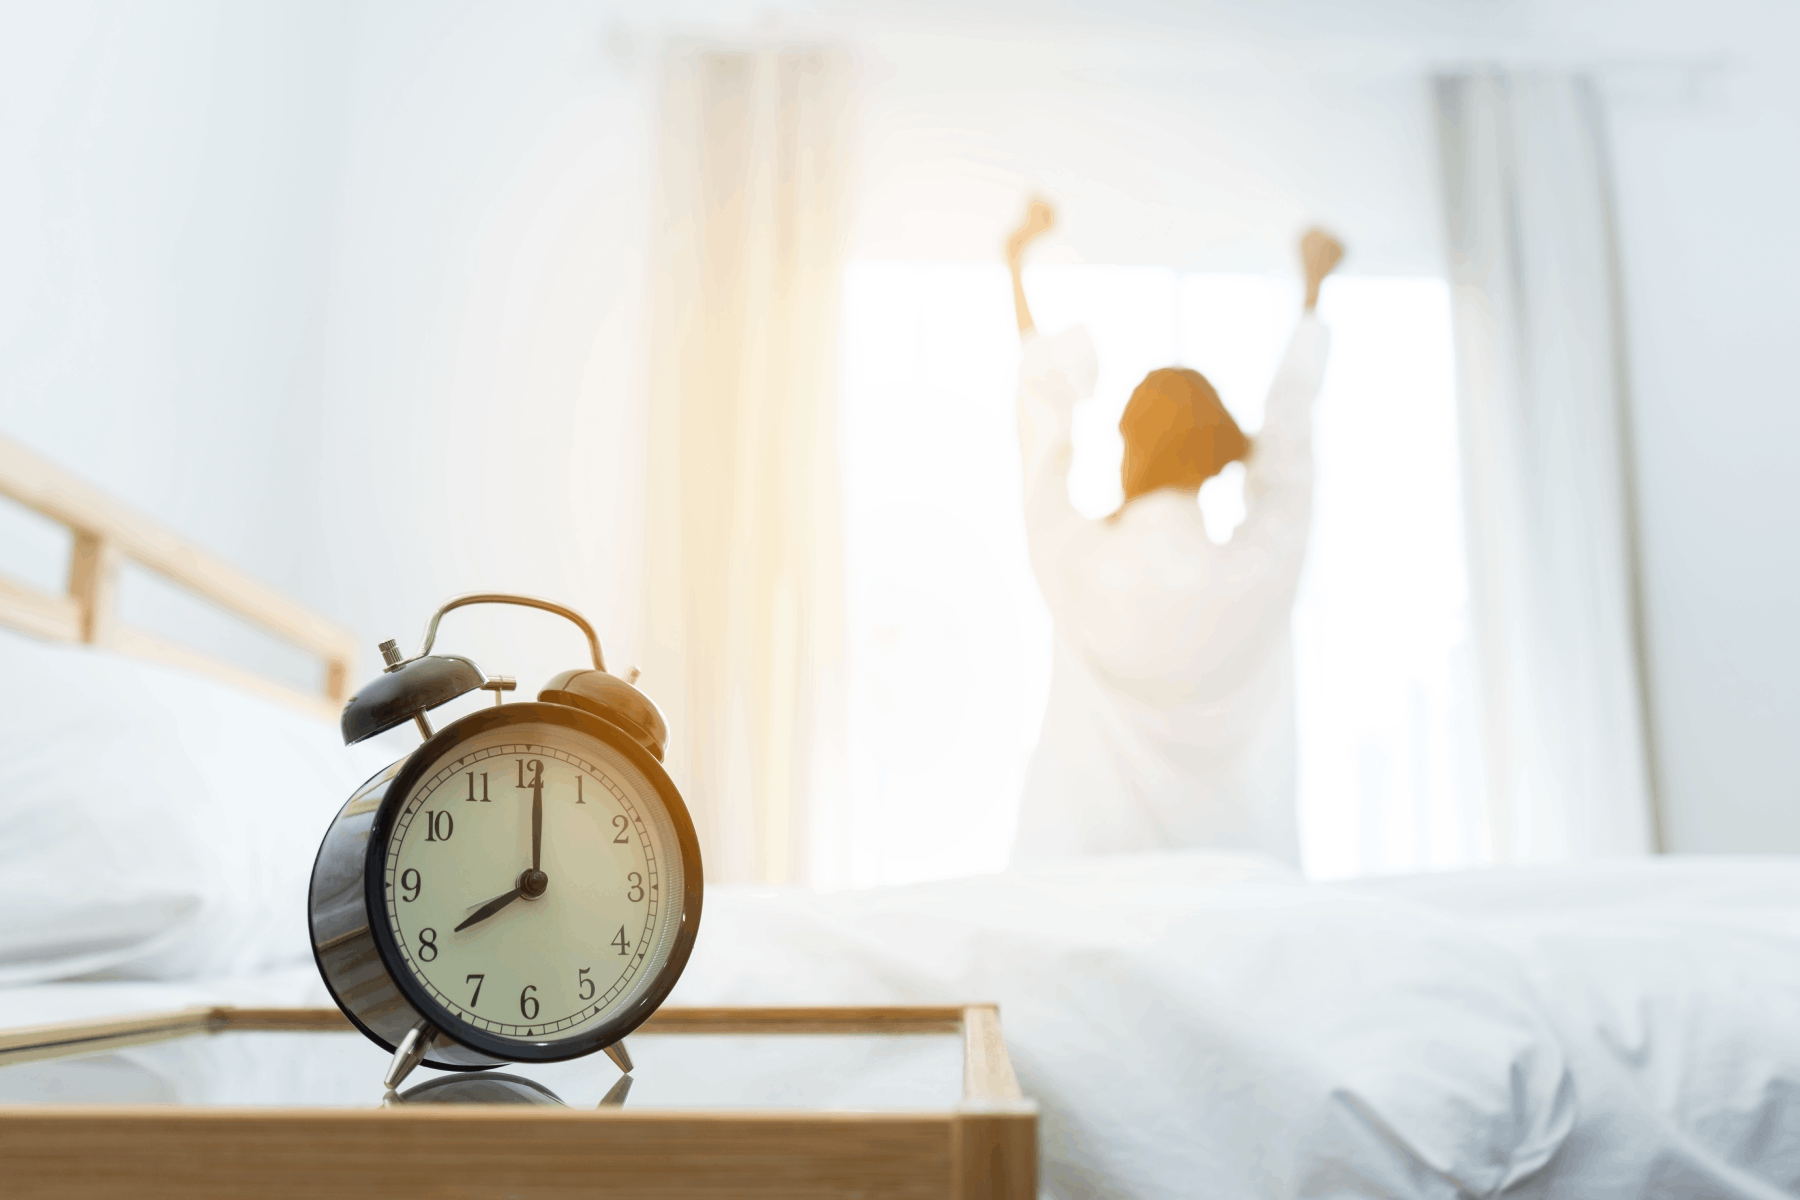 Alarm clock shows 8 o'clock in the morning